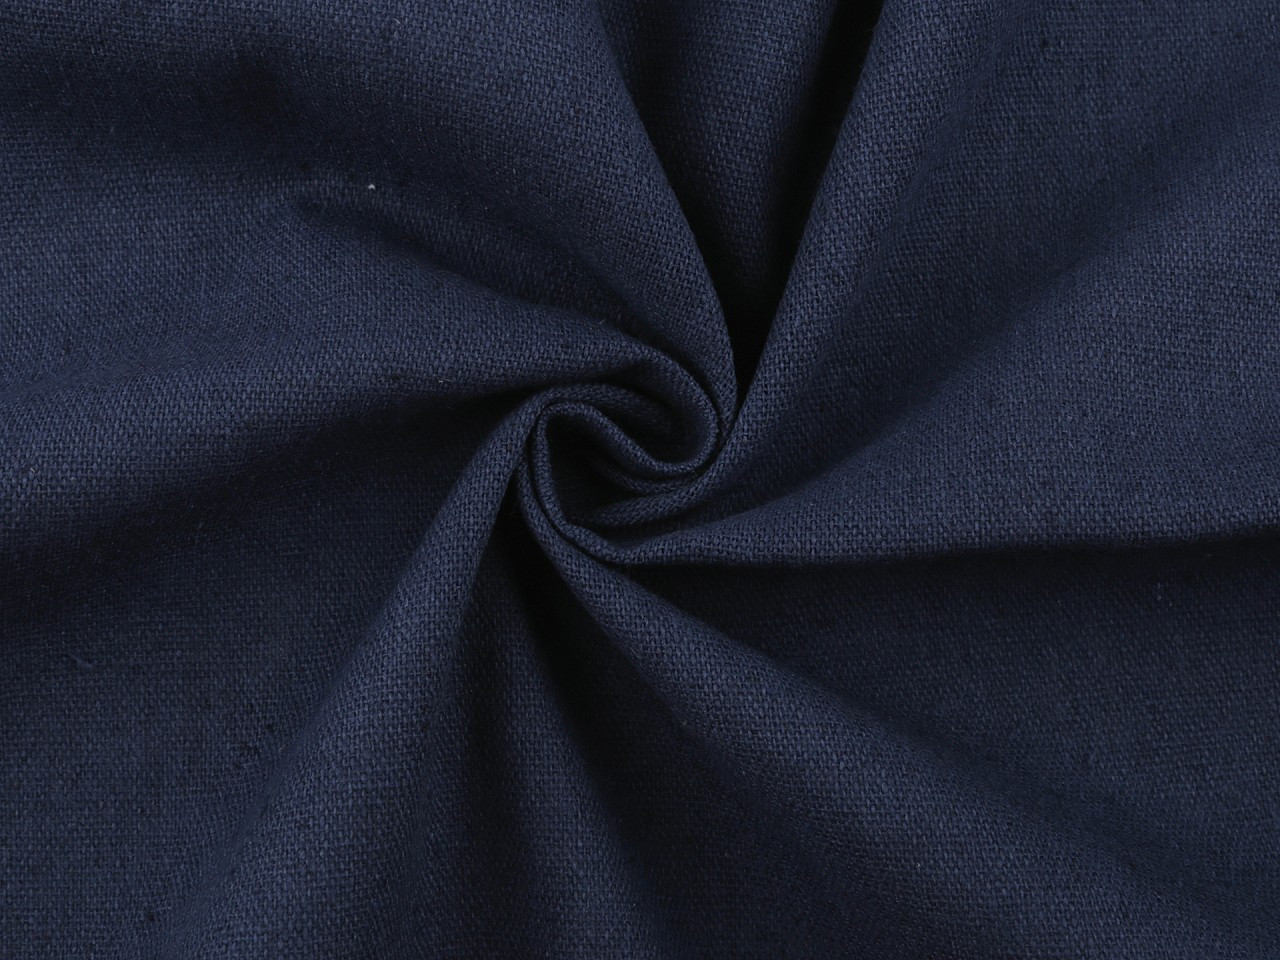 Lněná látka, barva 45 (170 g/m²) (39) modrá tmavá